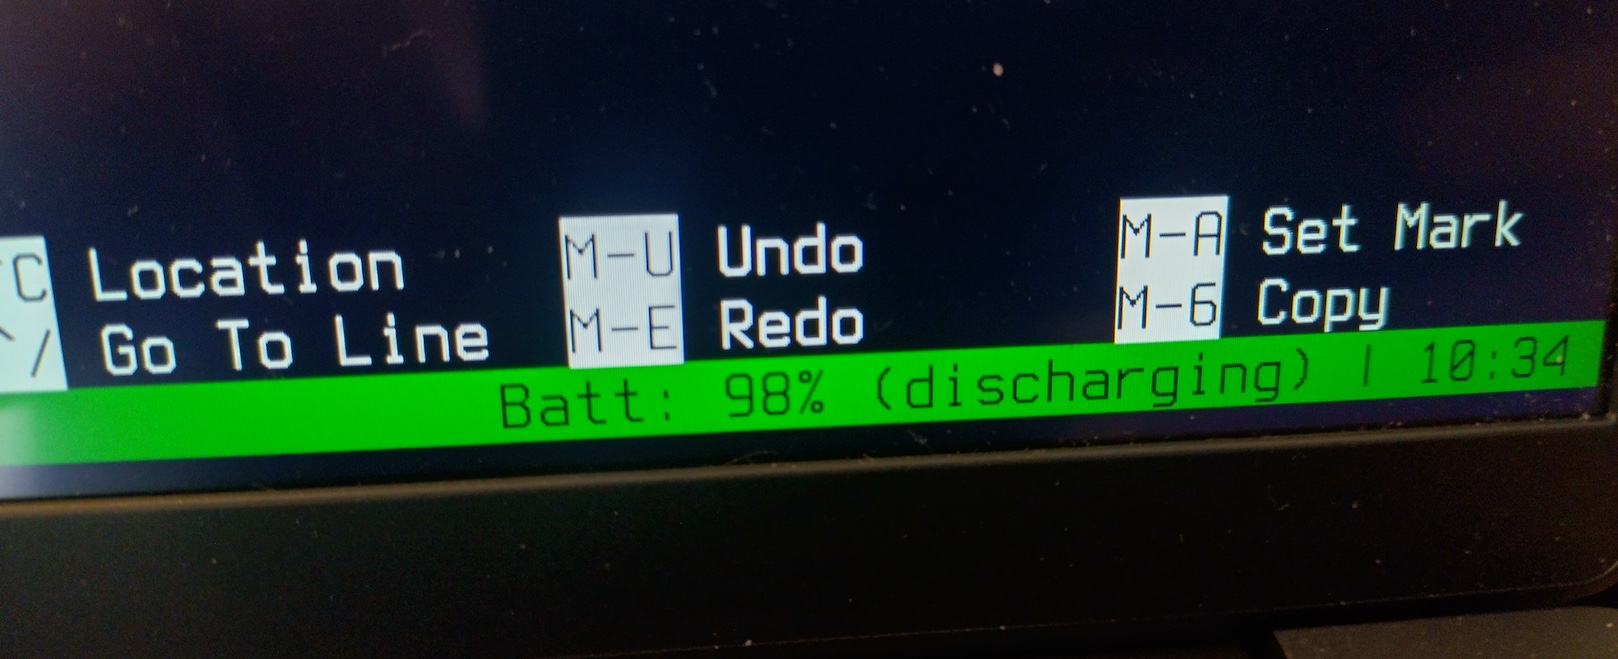 tmux battery information